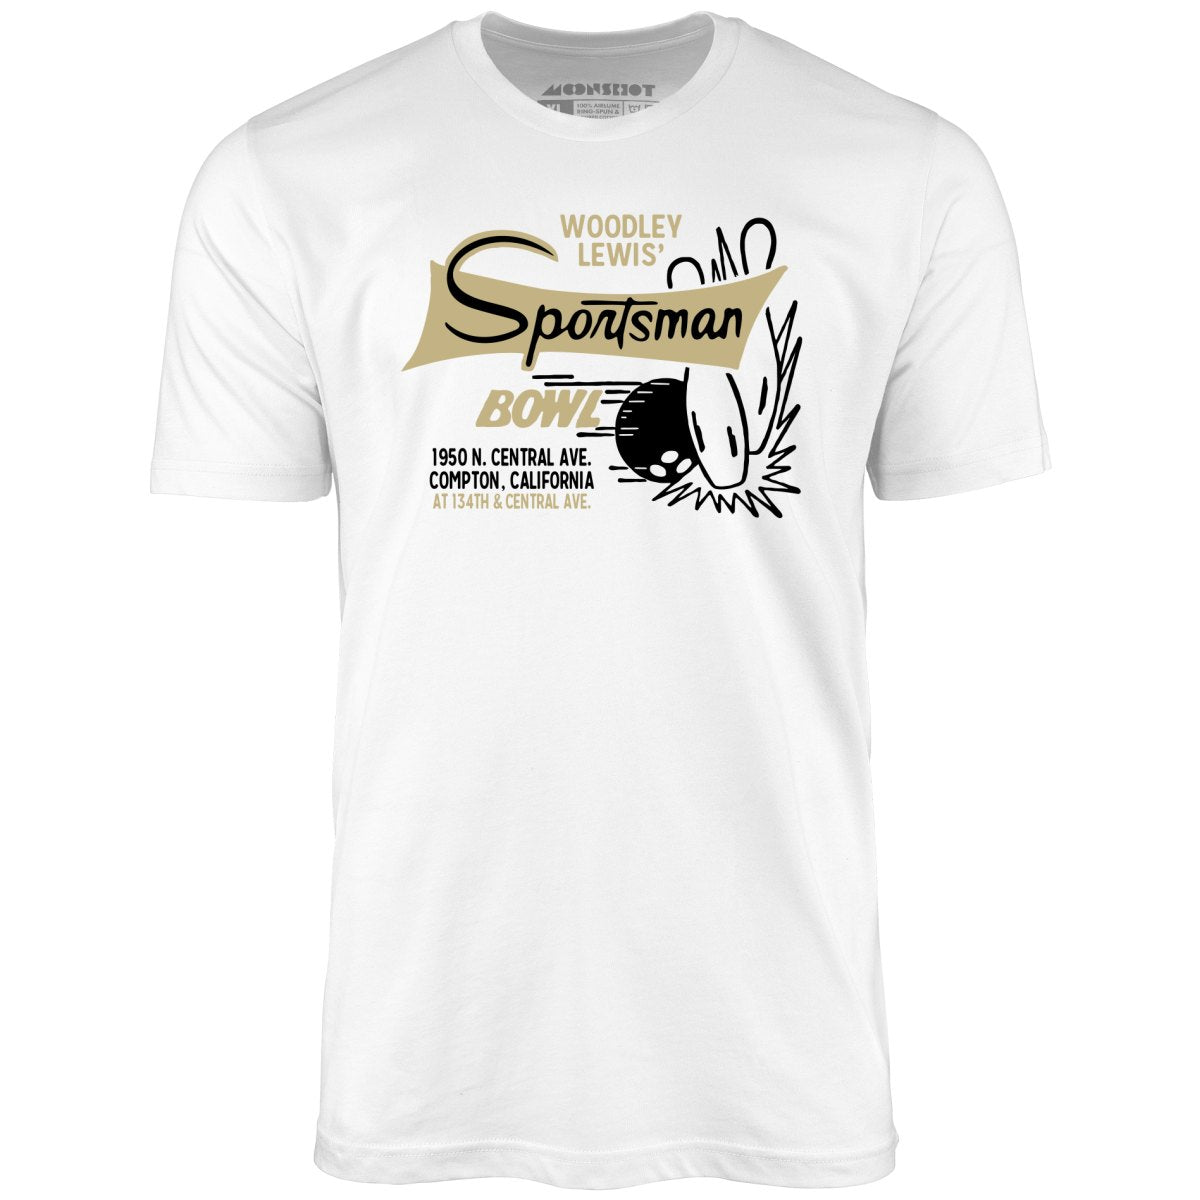 Woodley Lewis Sportsman Bowl - Compton, CA - Vintage Bowling Alley - Unisex T-Shirt